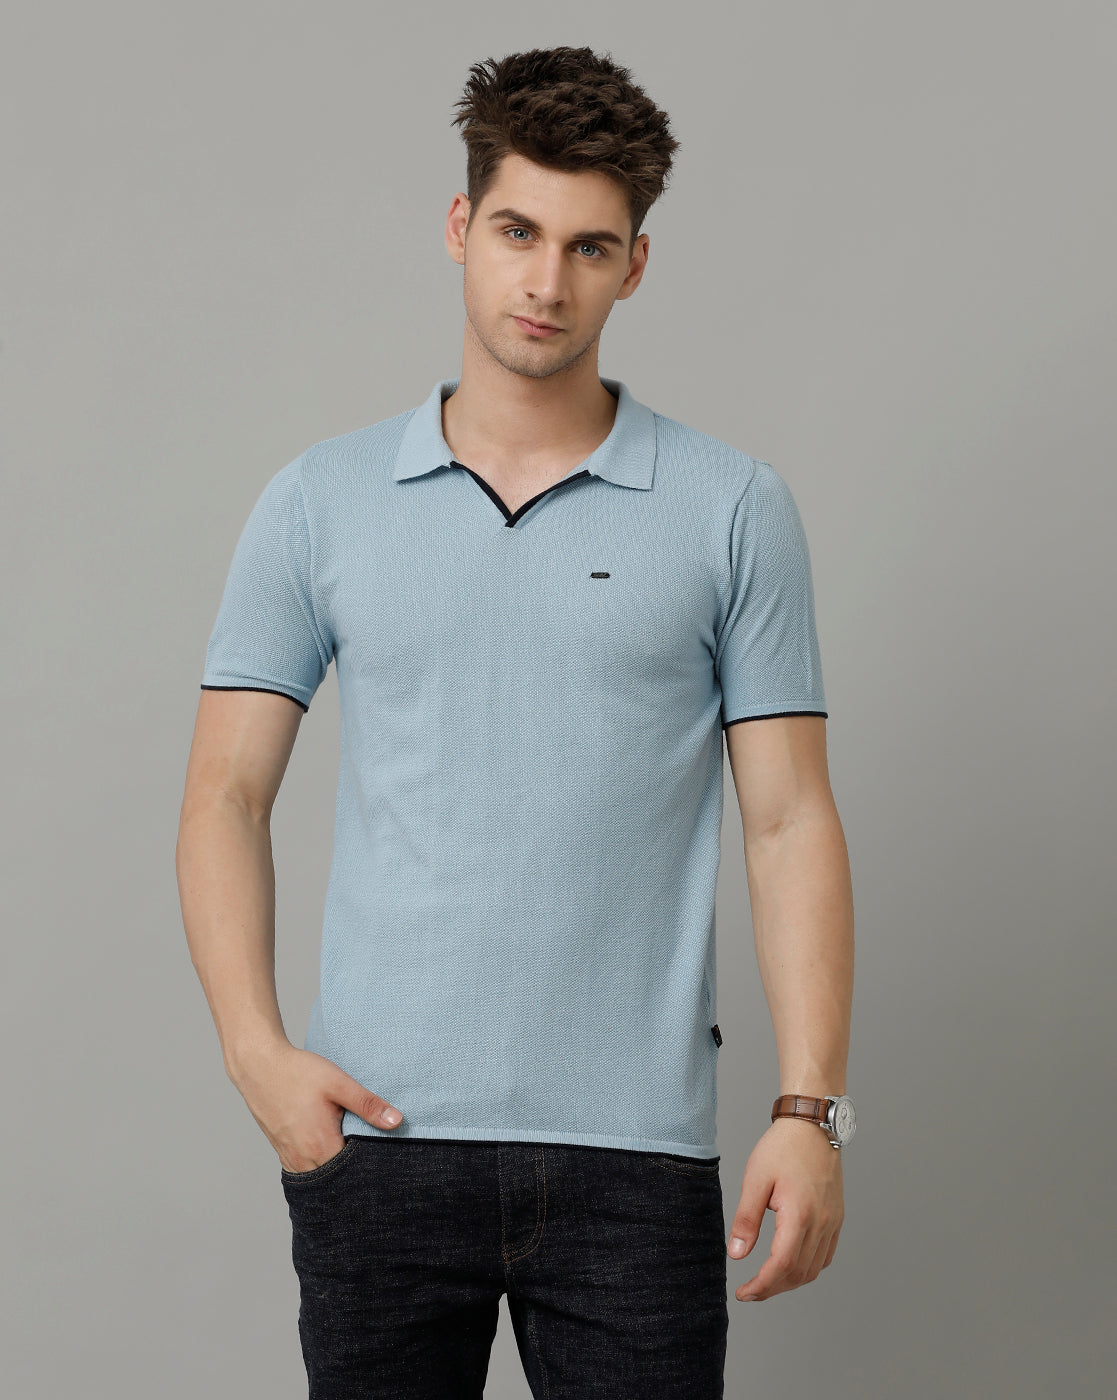 Identiti Powder Blue Half Sleeve Solid Slim Fit Cotton Casual Polo T-Shirt For Men.